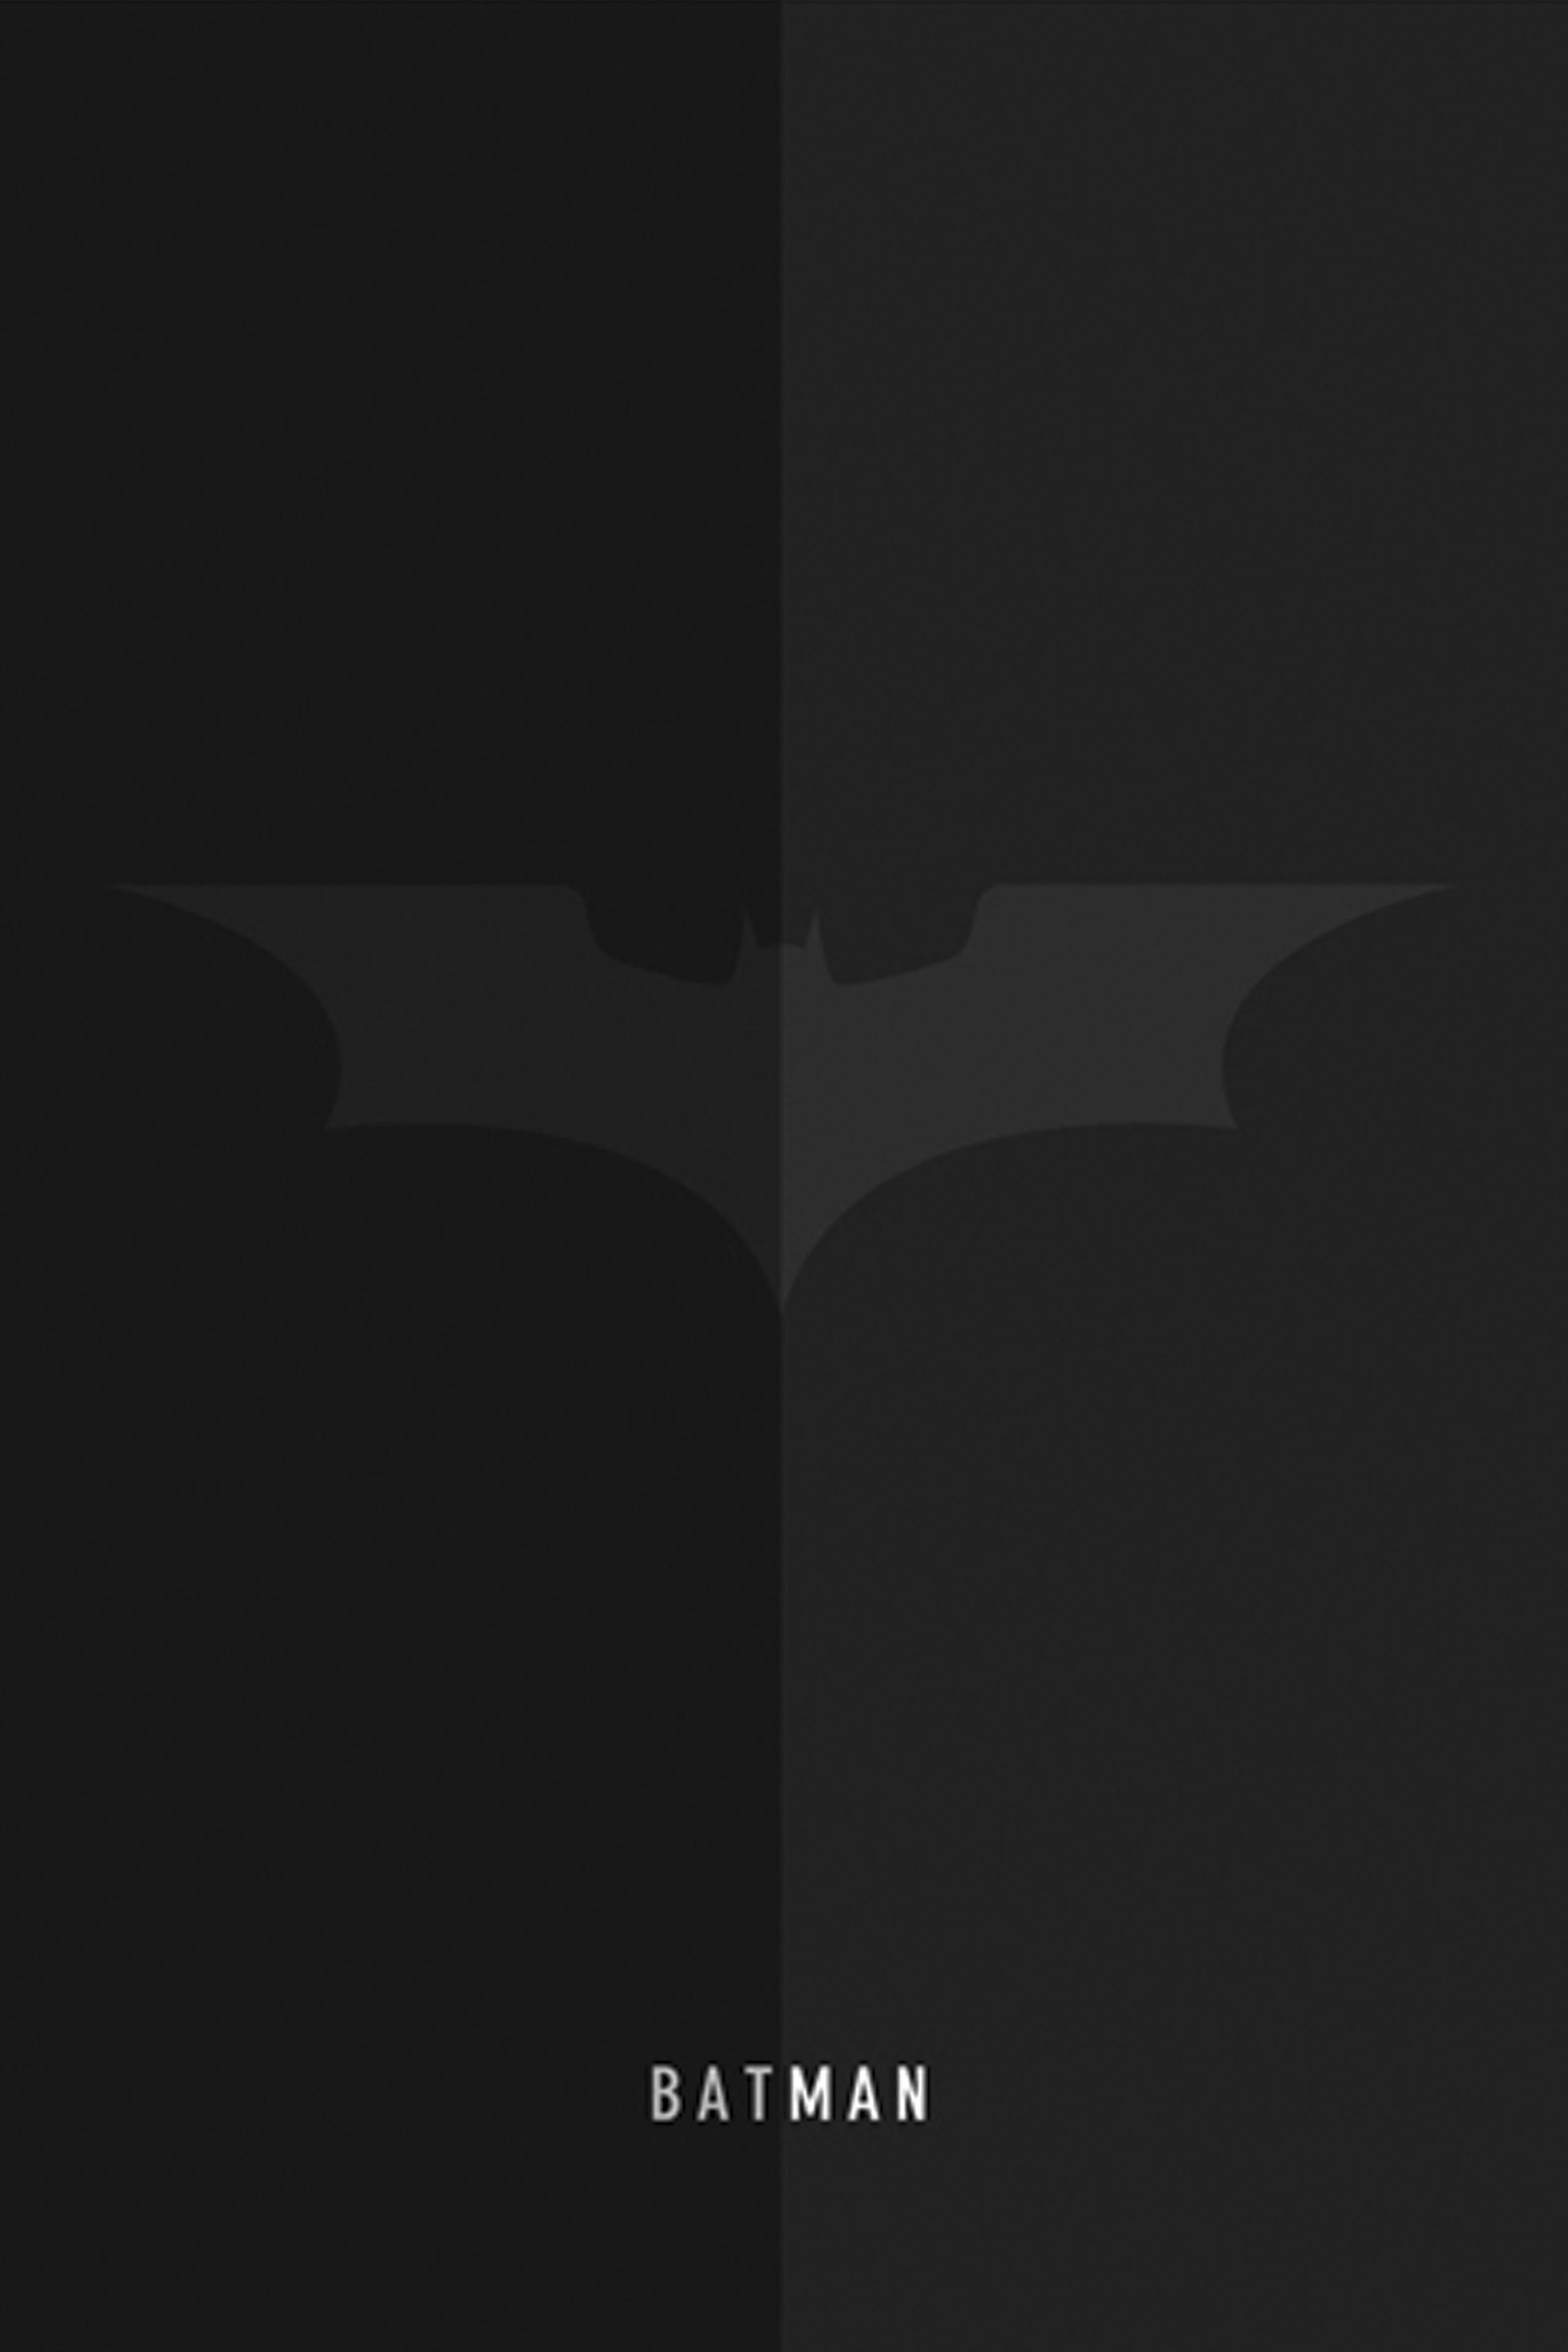 batman mobile wallpaper minimalist 2560x3840. Batman wallpaper, Mobile wallpaper, Batman wallpaper iphone